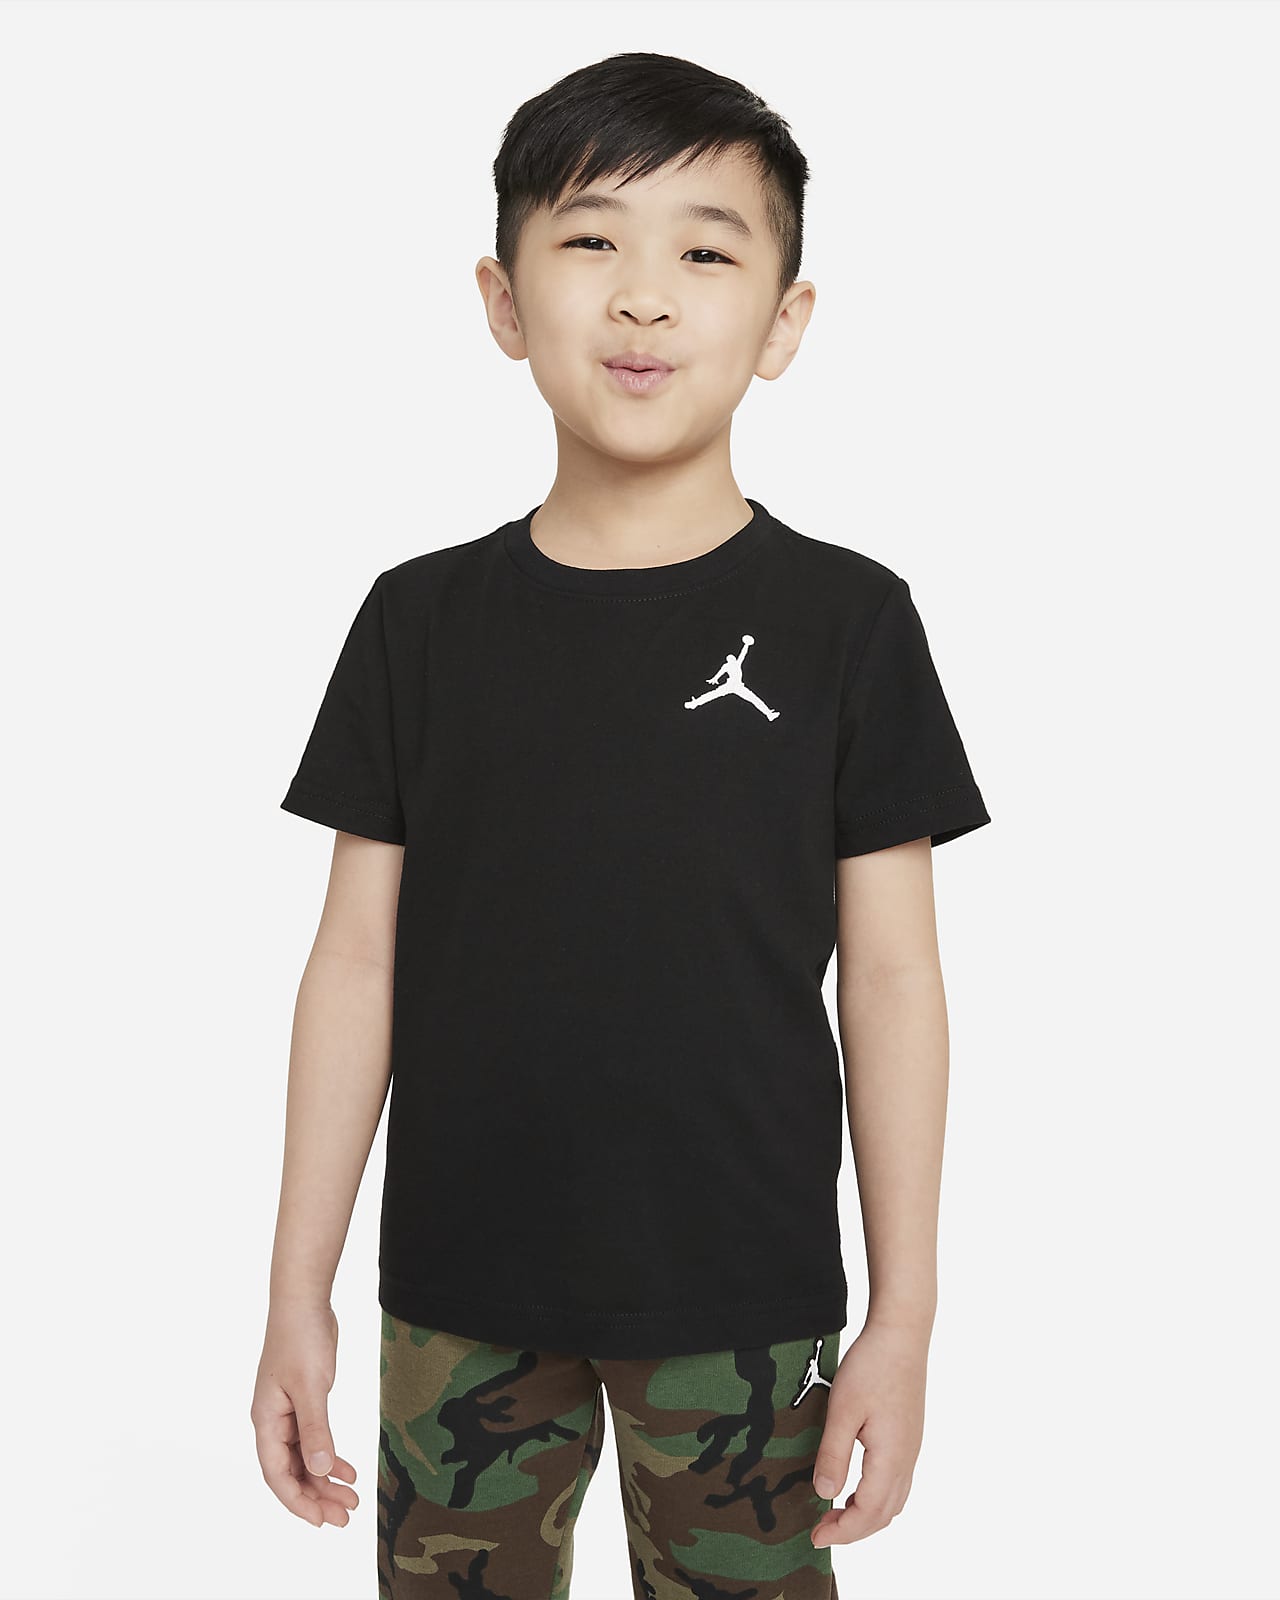 Jordan T-Shirt für jüngere Kinder